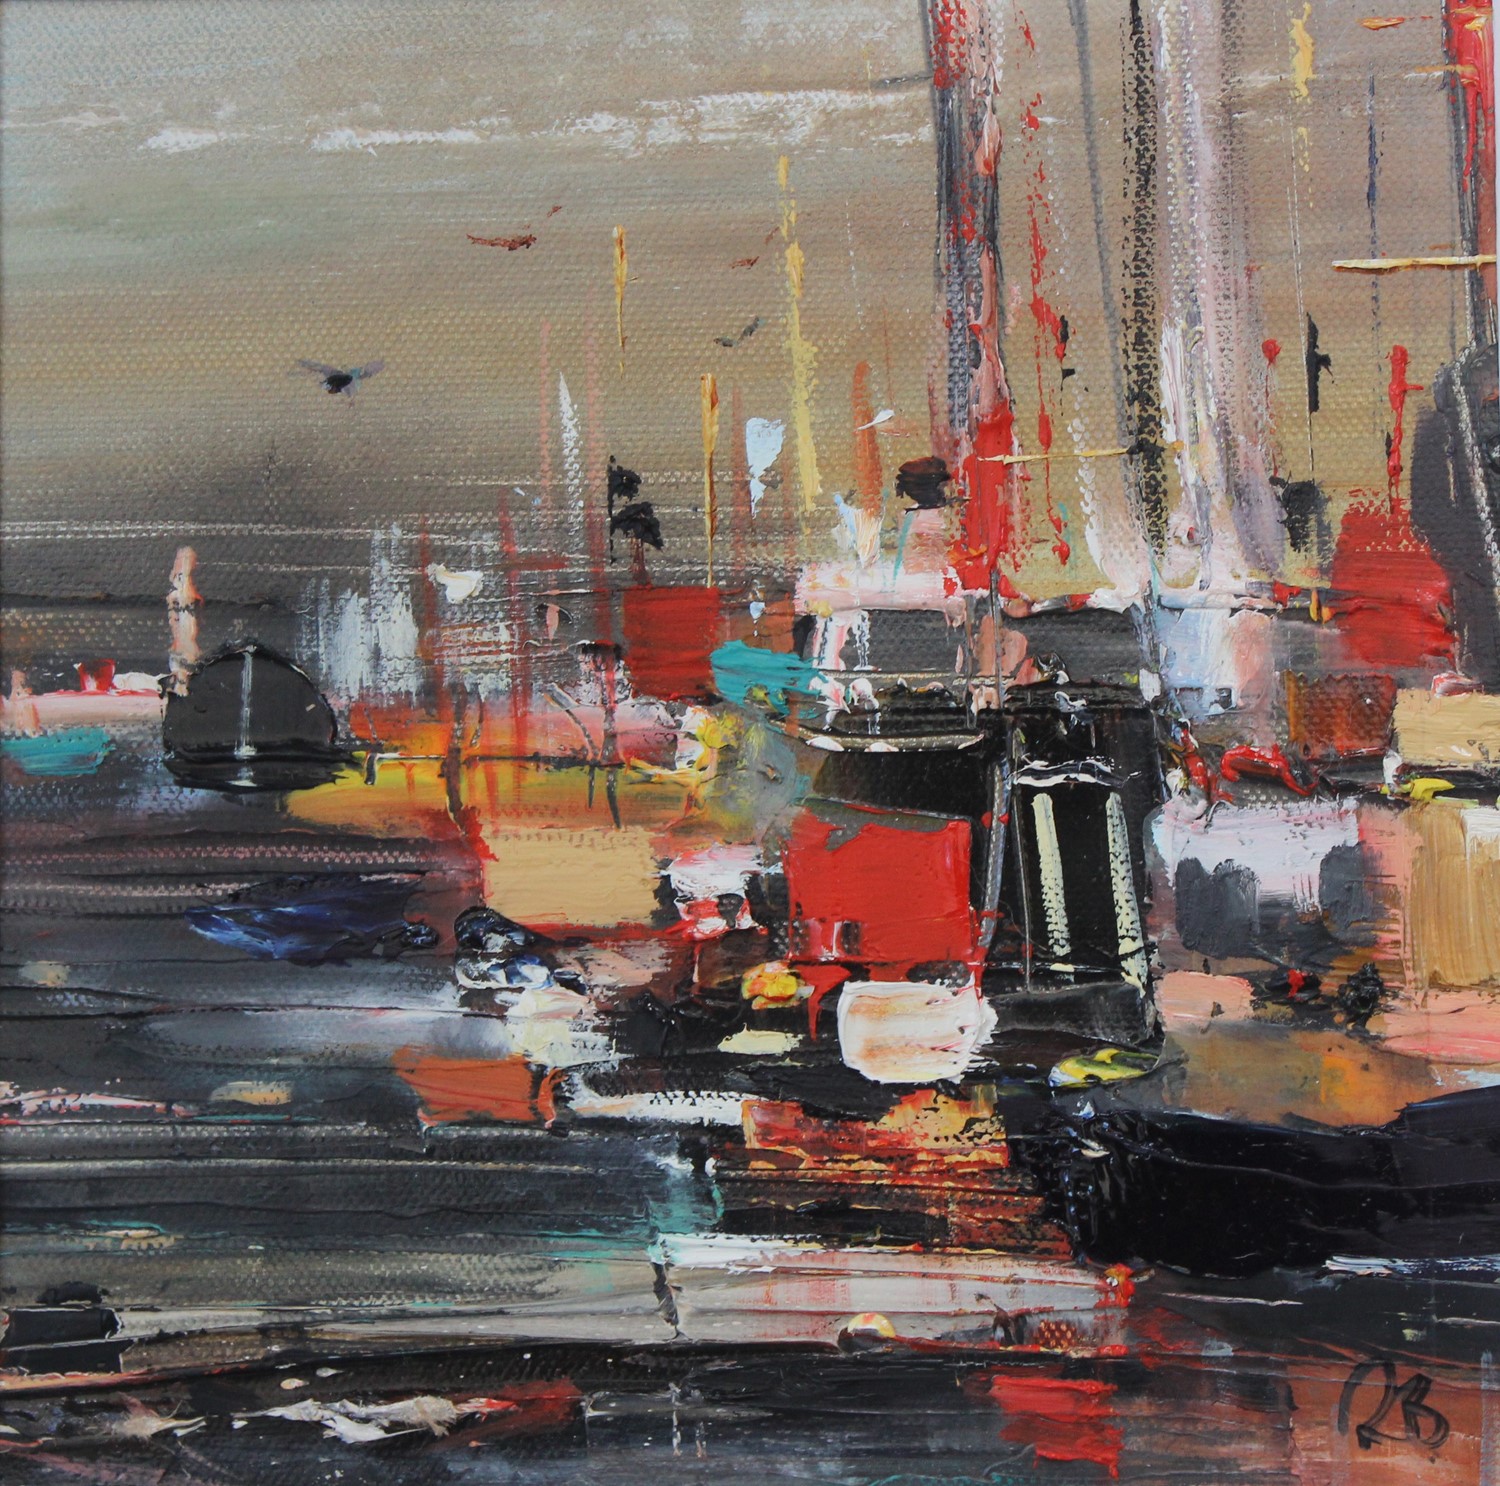 'A Busy Little Harbour' by artist Rosanne Barr